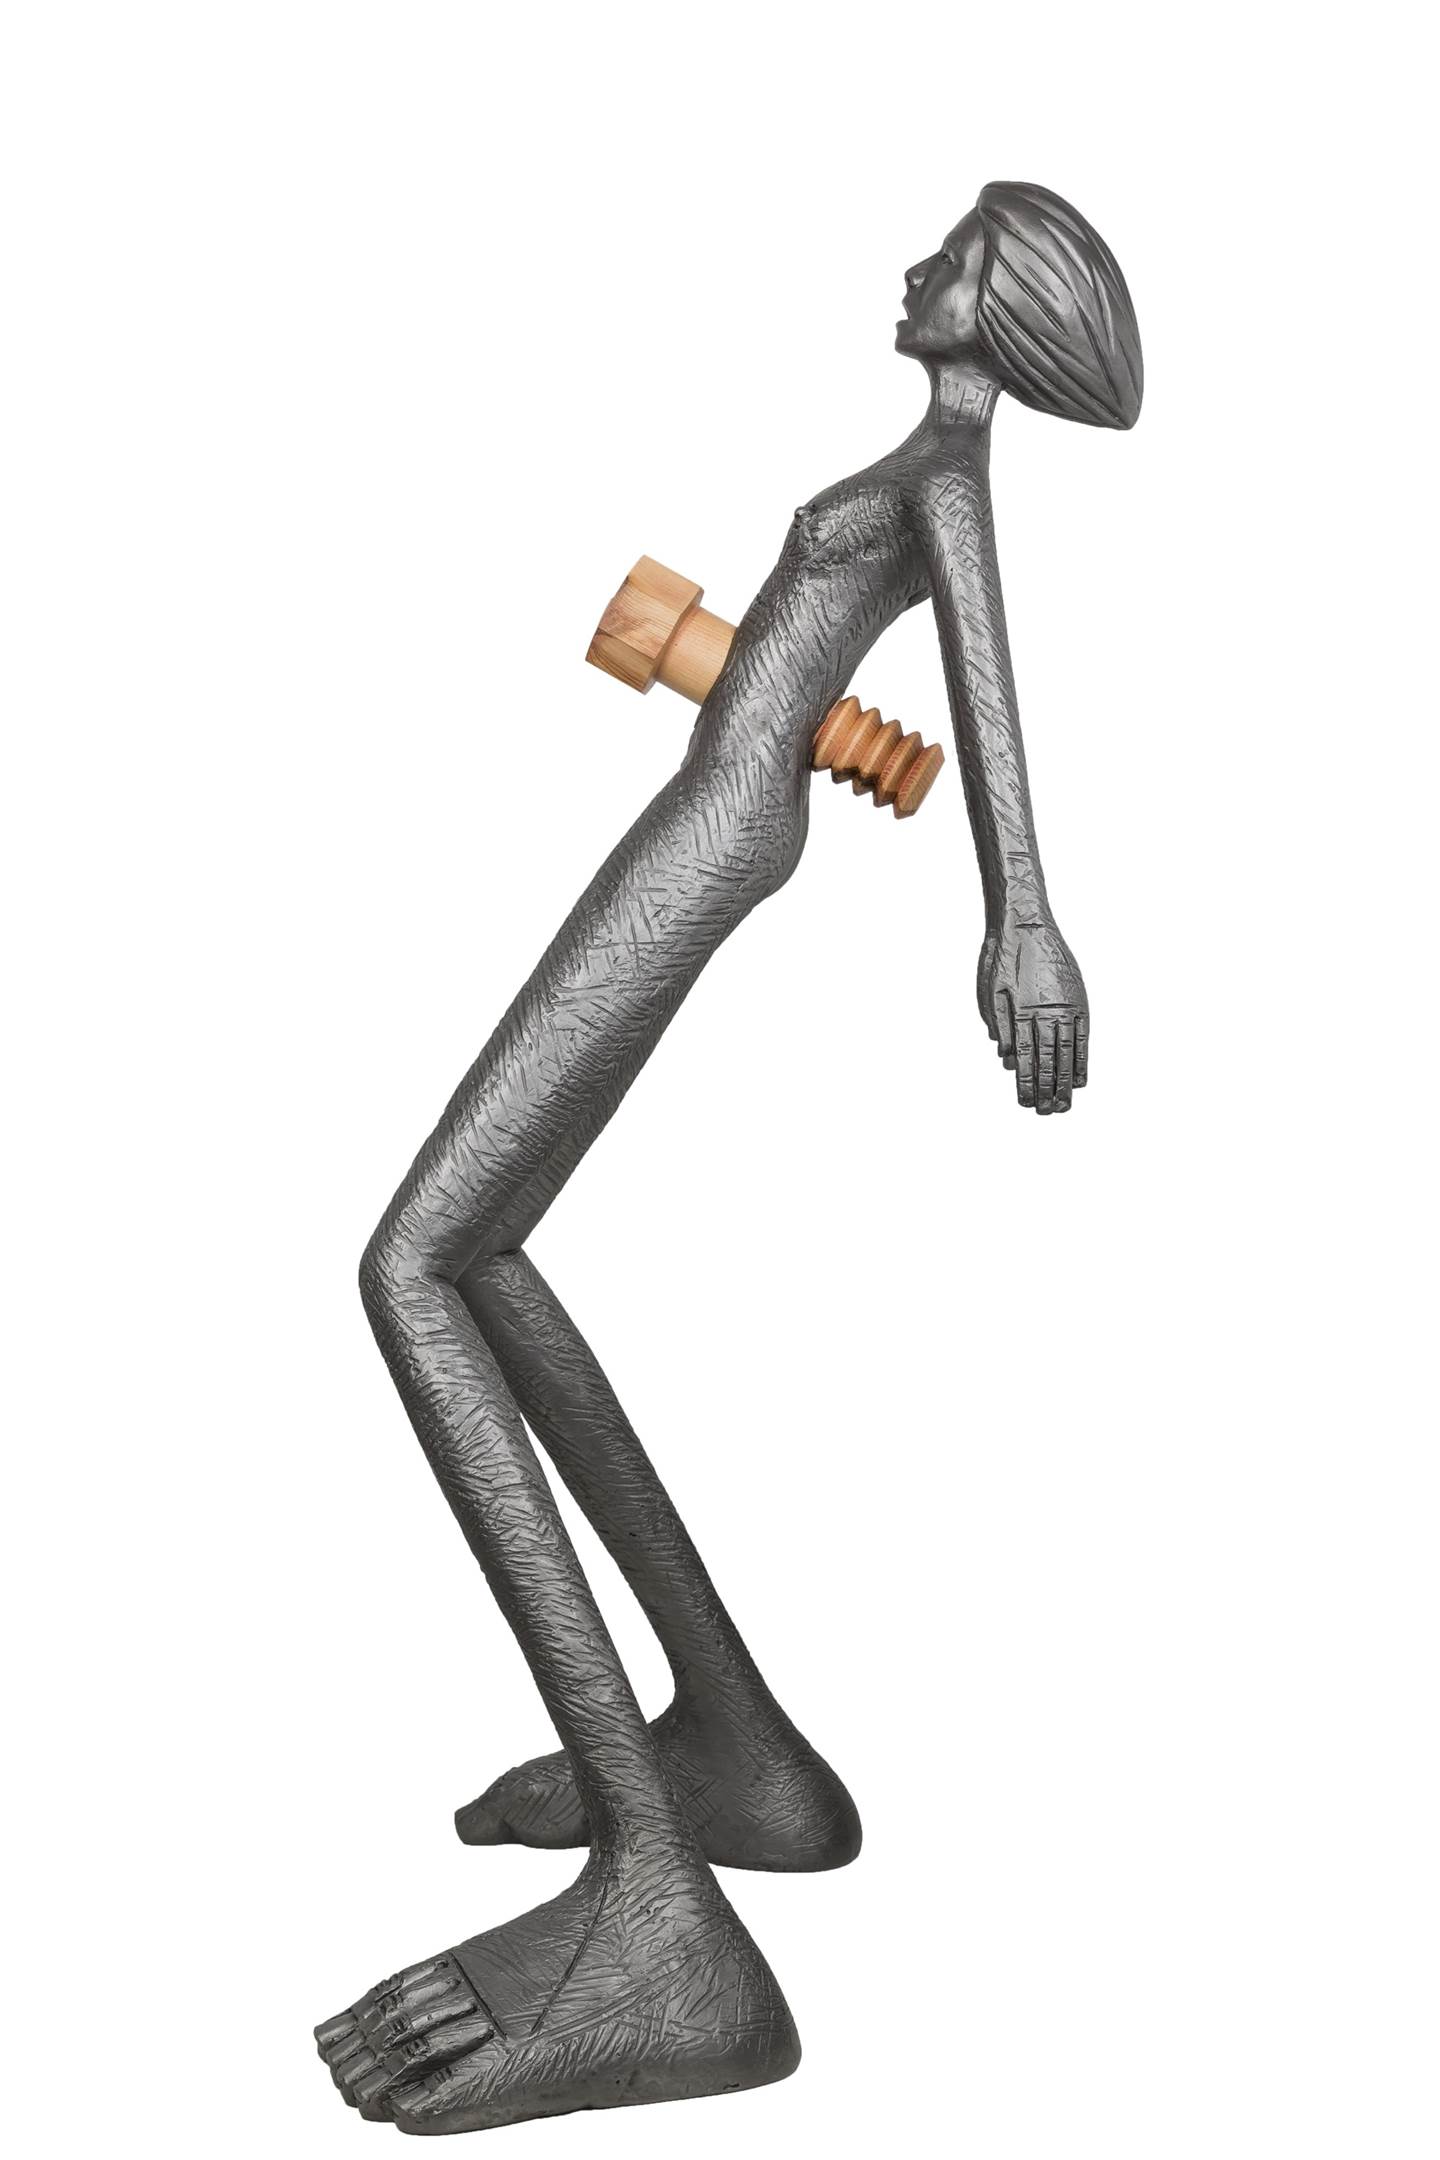 Interseção Umbilical, original Figure humaine Technique mixte Sculpture par Pedro Figueiredo